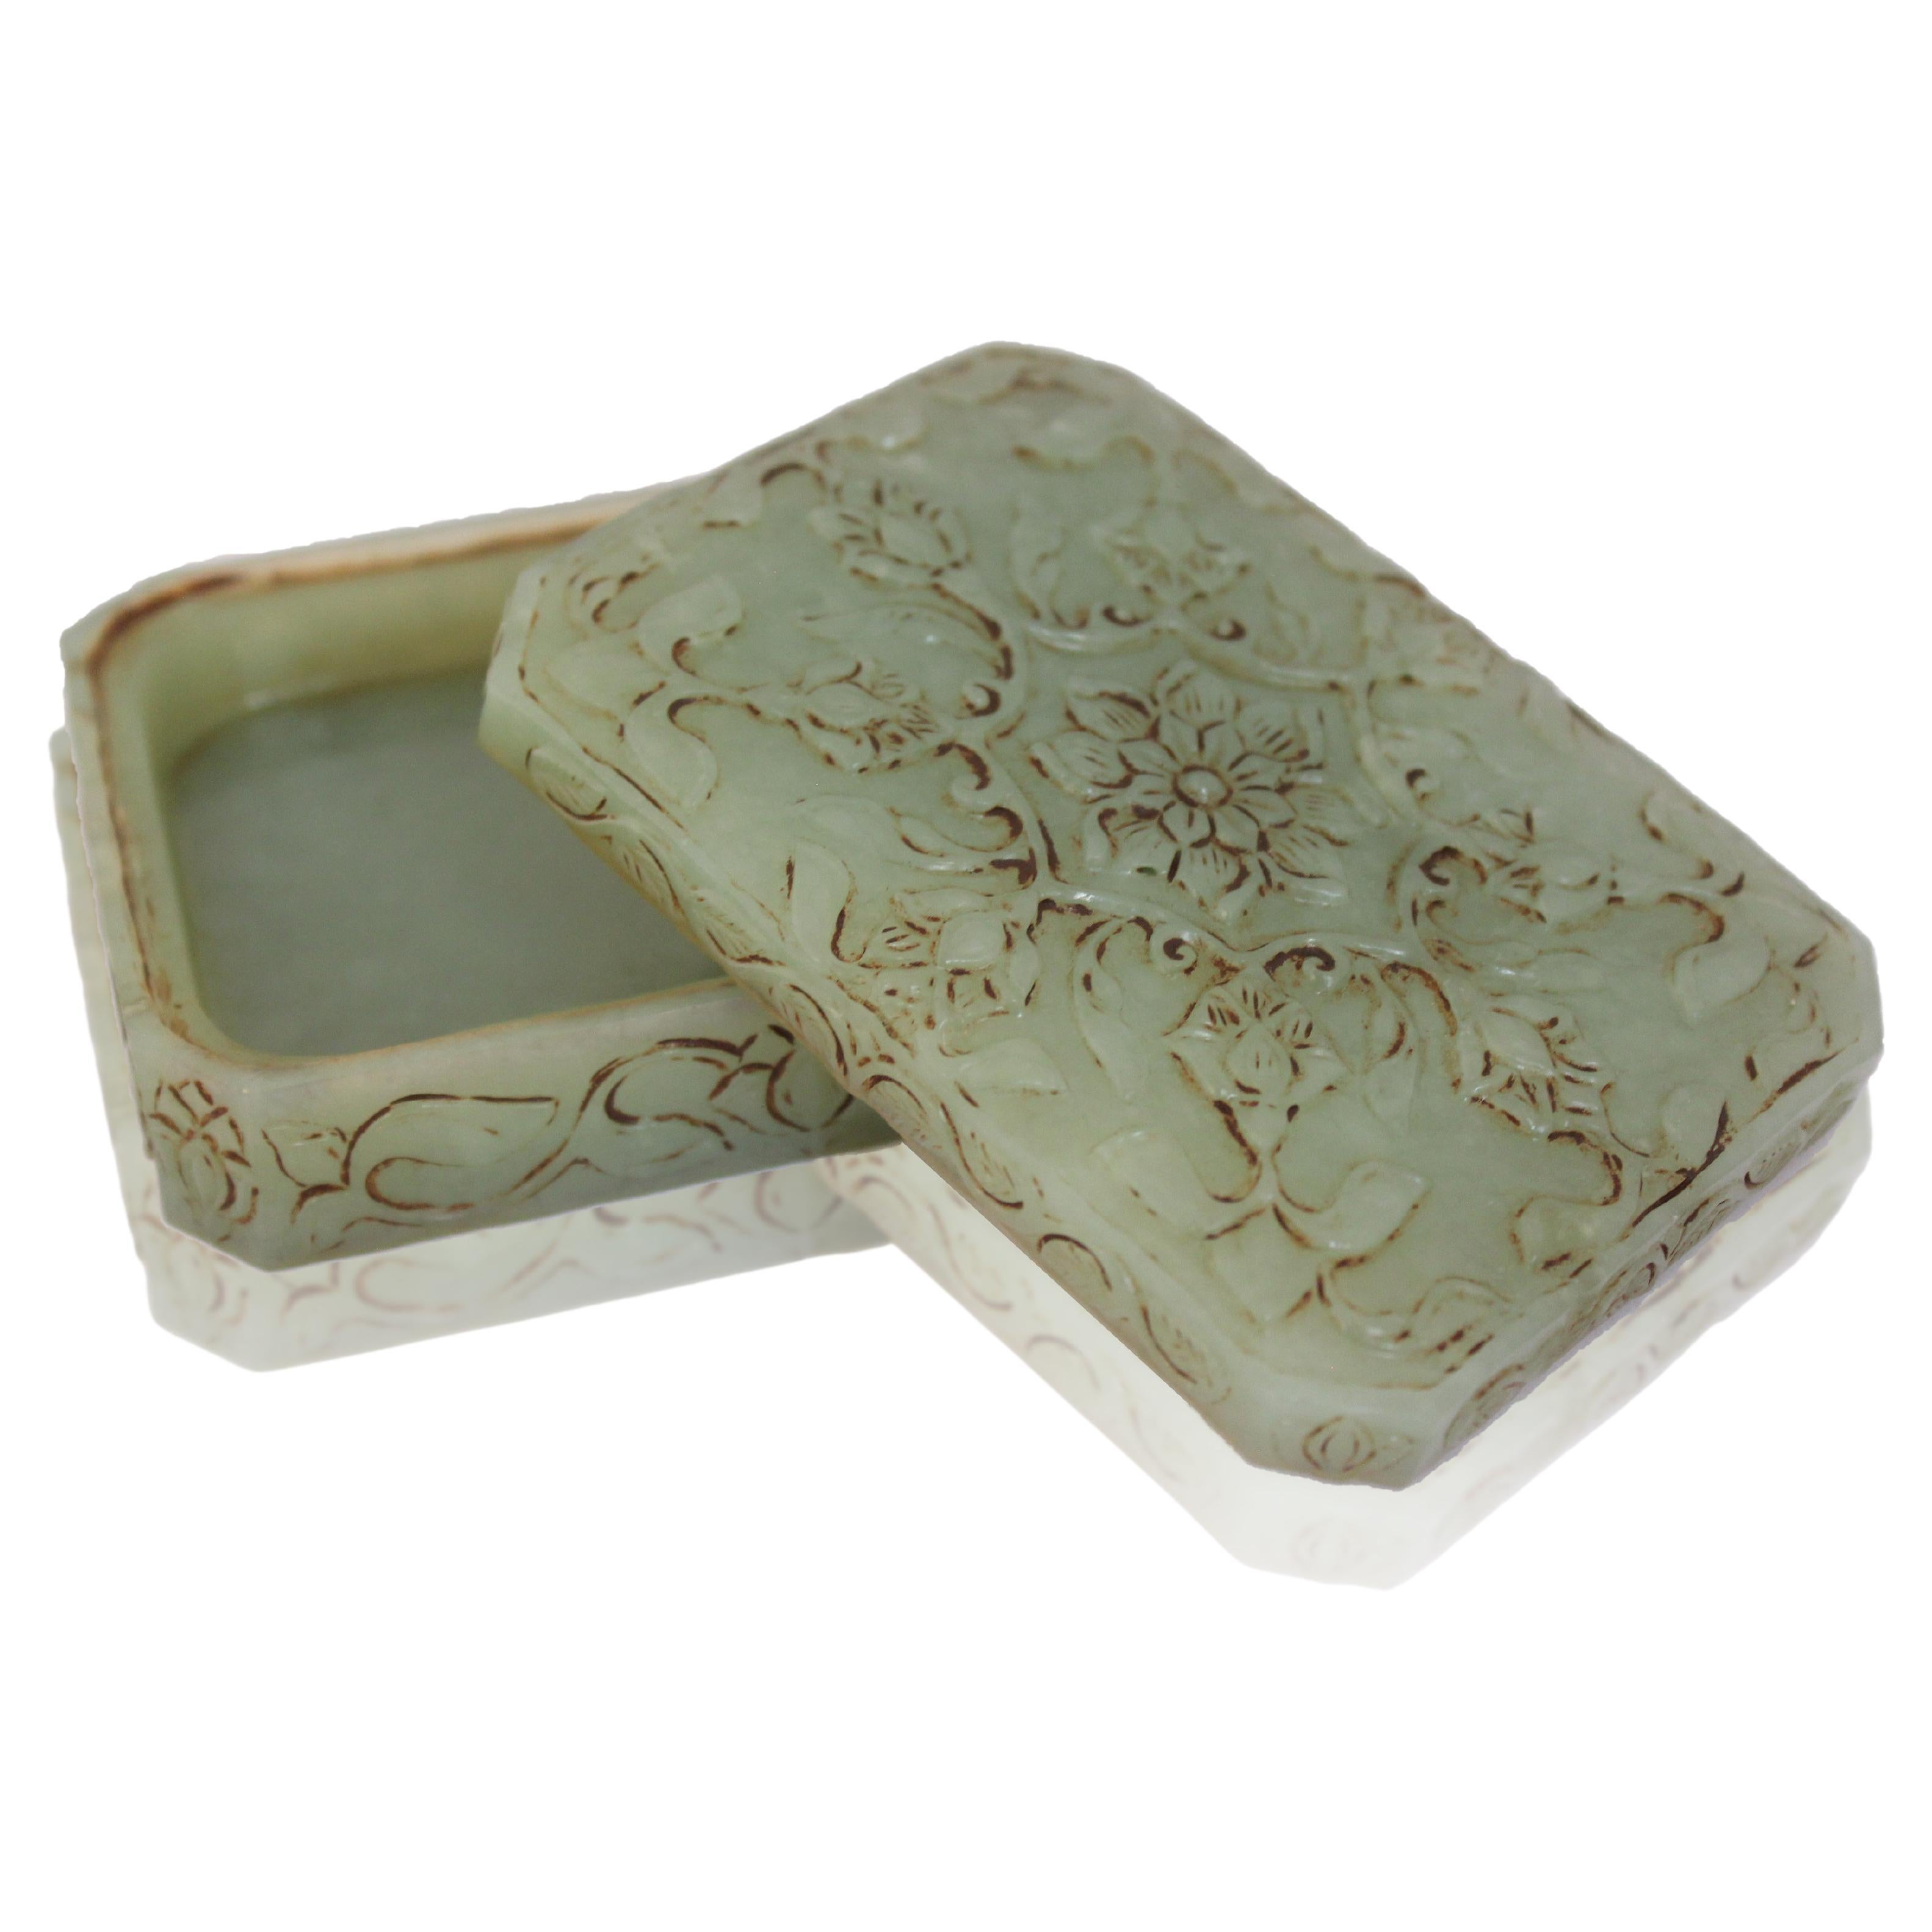 A Fine rectangular mughal Nephrite Jade box and cover